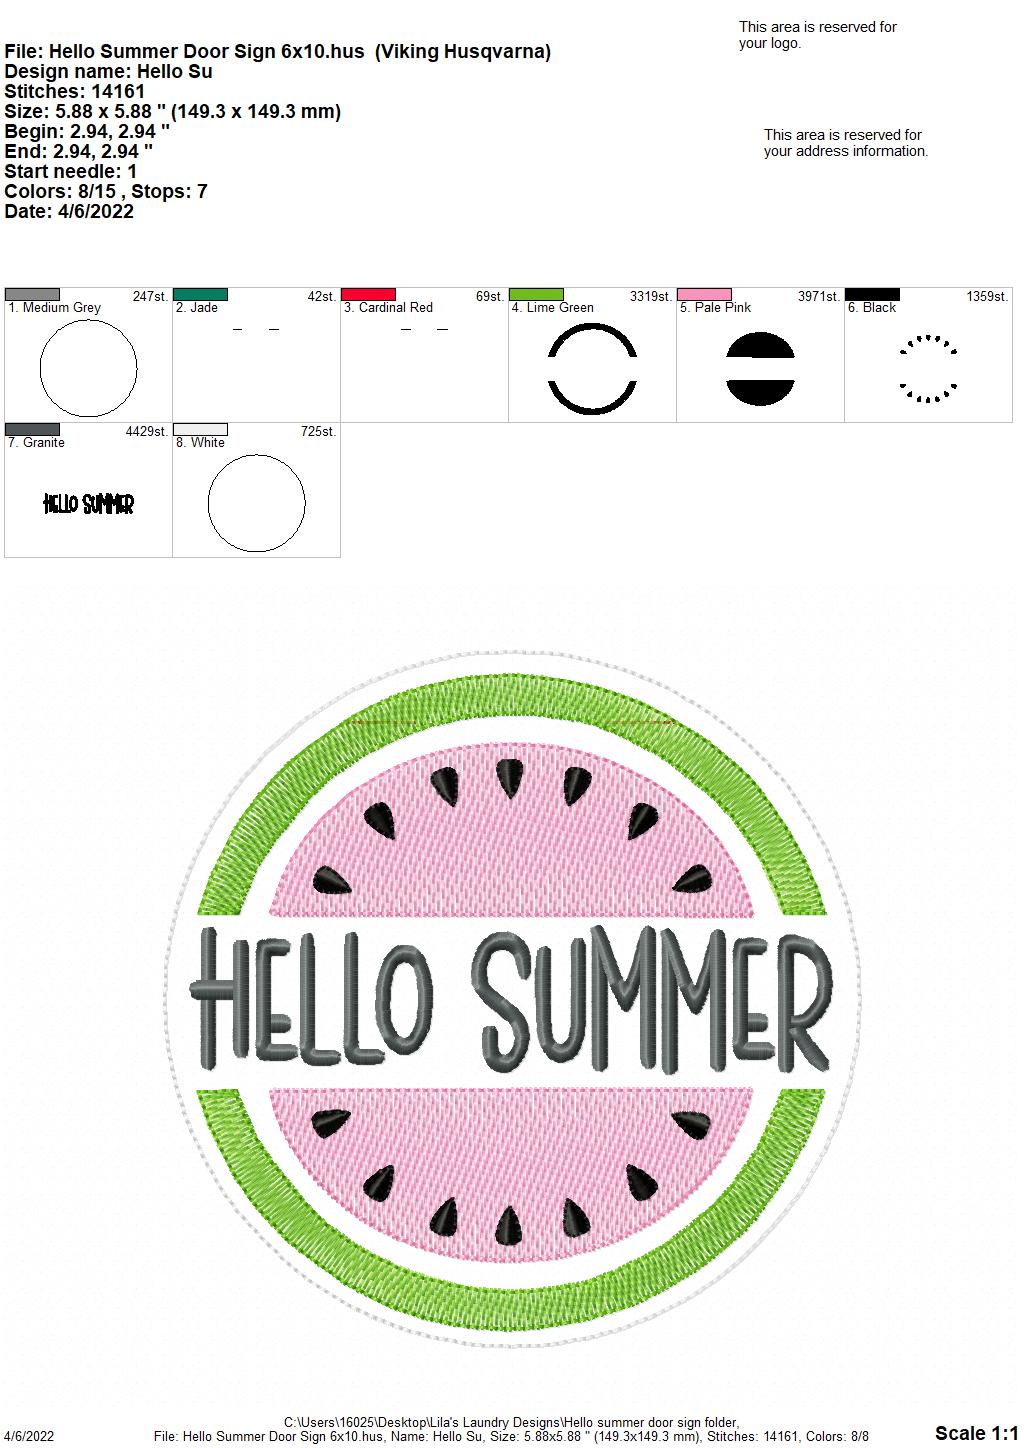 Hello Summer Door Sign - 3 sizes - Digital Embroidery Design